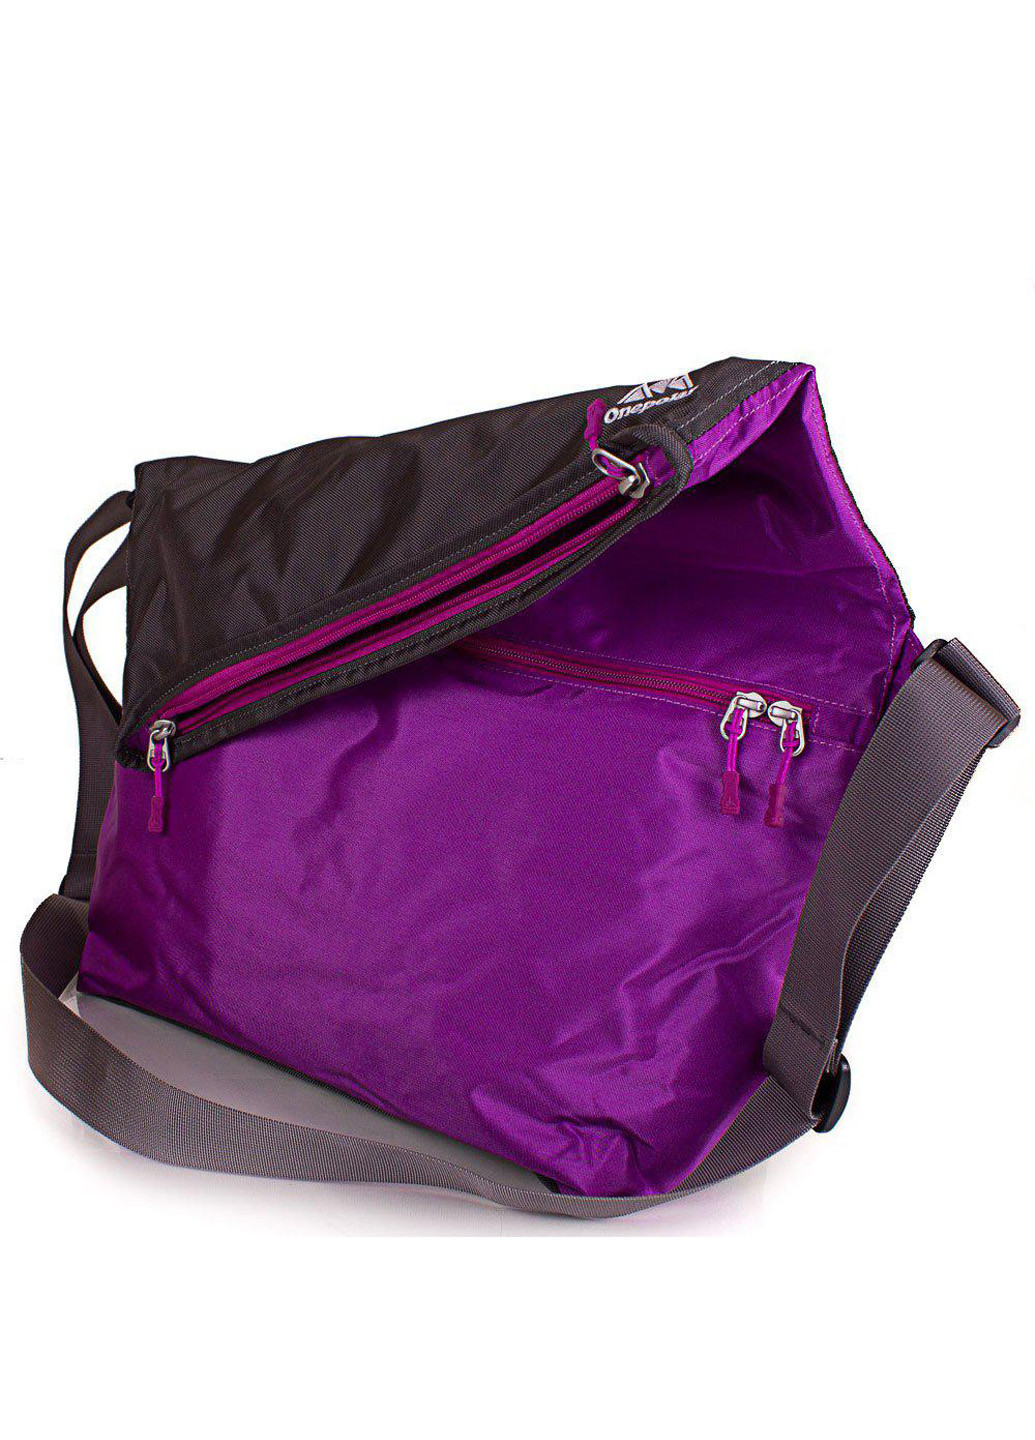 Женская спортивная сумка 33х47х15 см Onepolar (195537972)